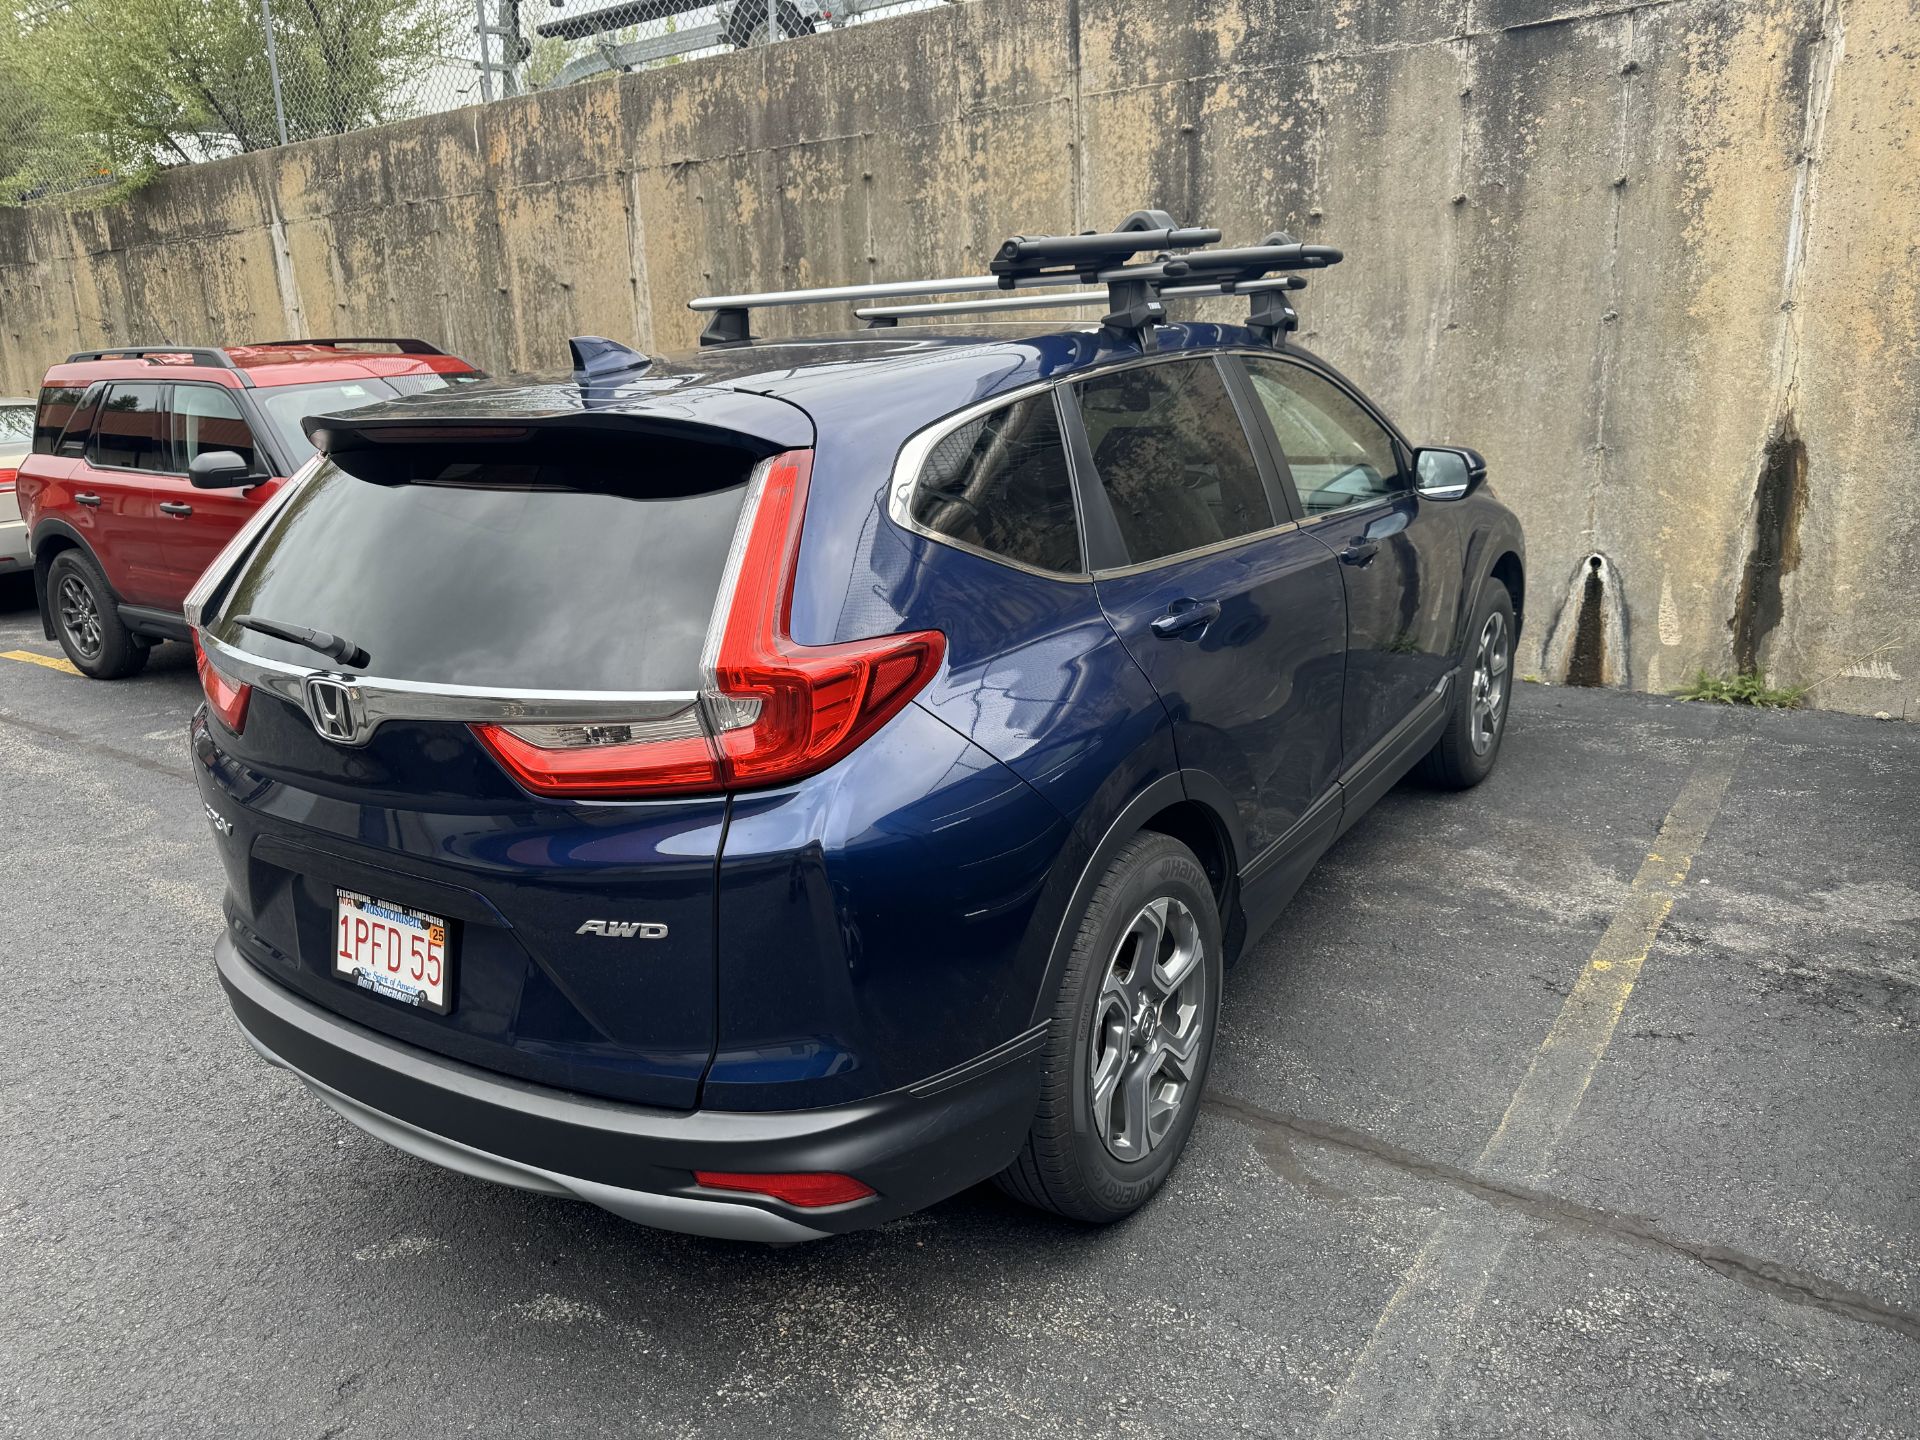 2019 Honda CRV SUV, 4 Wheel Drive, 4 Cylinder Gas Motor, Leather Interior, lOdom: 73,739, - Image 2 of 8